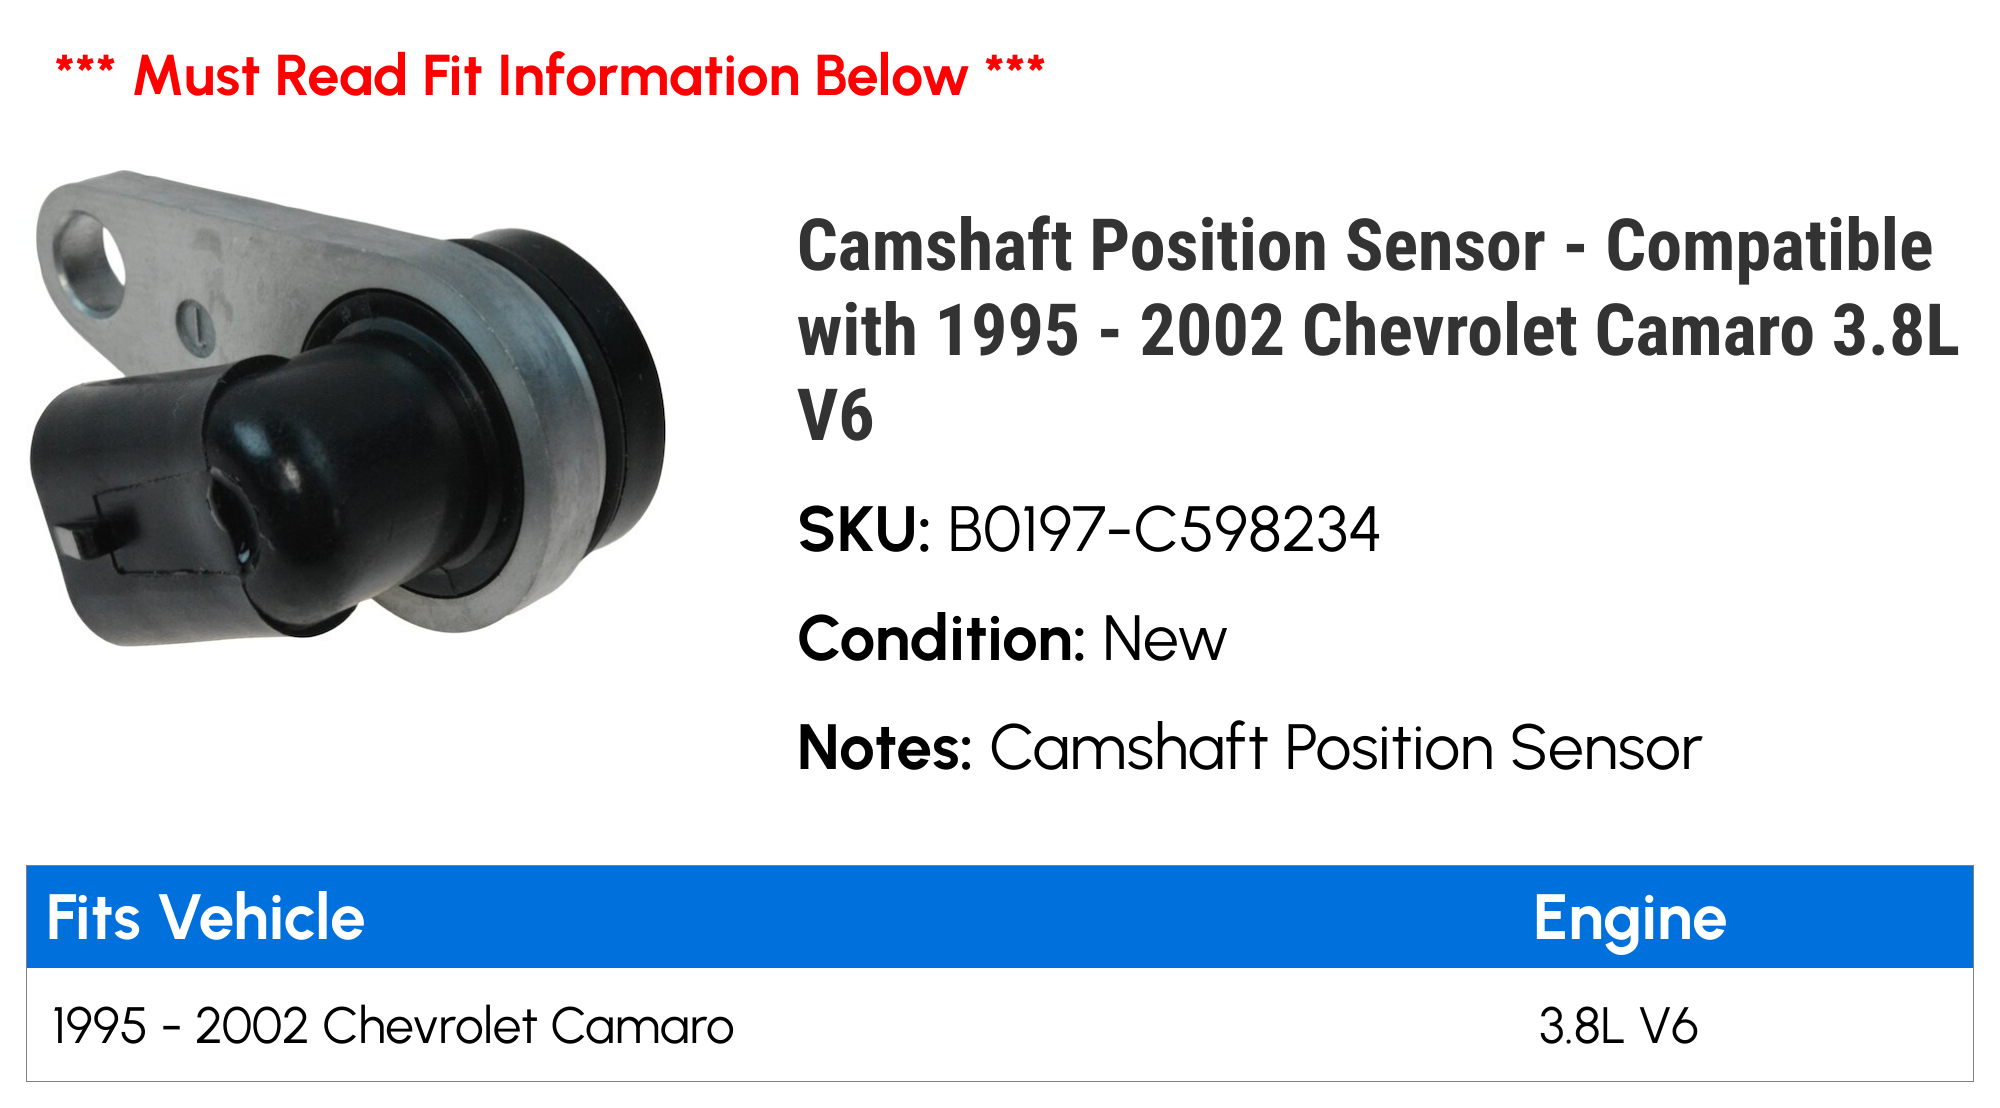 Camshaft Position Sensor - Compatible with 1995 - 2002 Chevy Camaro 3.8L V6 1996 1997 1998 1999 2000 2001 - image 2 of 2